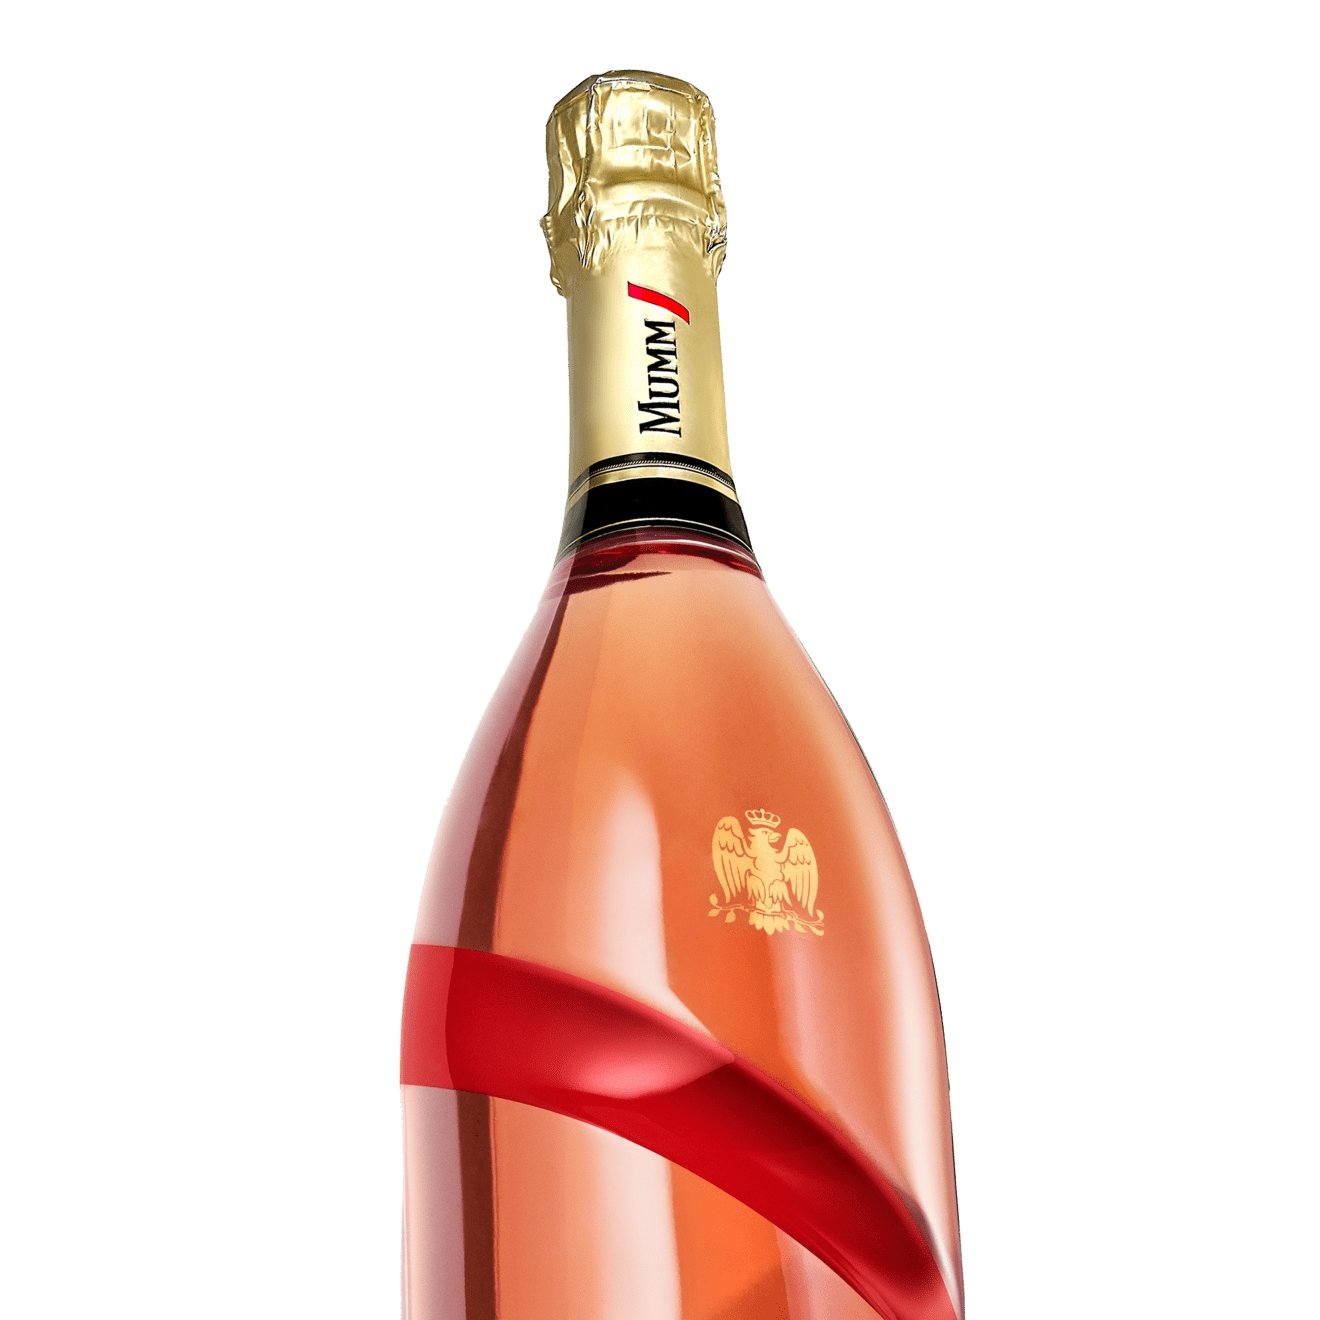 G.H. Mumm Grand Cordon Rosé NV Champagne (750mL) - drinkswithdave